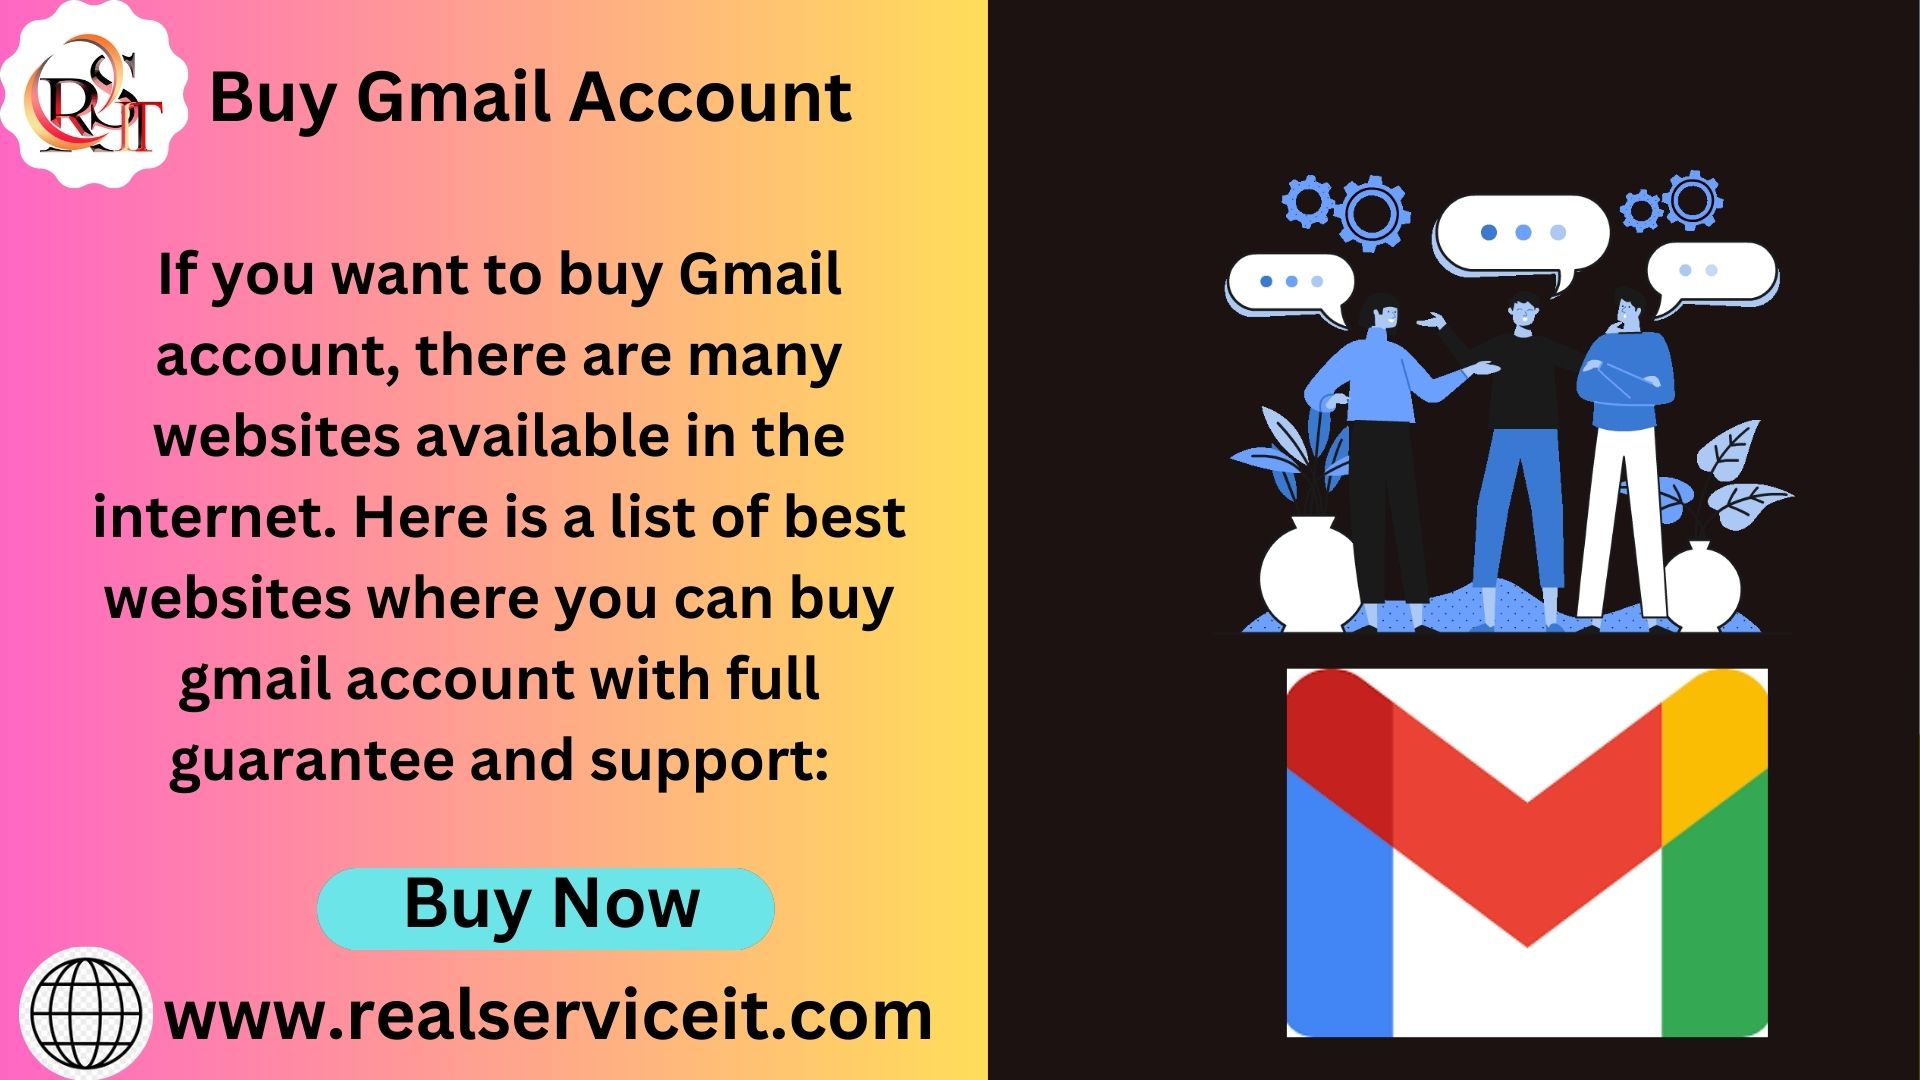 Buy Gmail Account